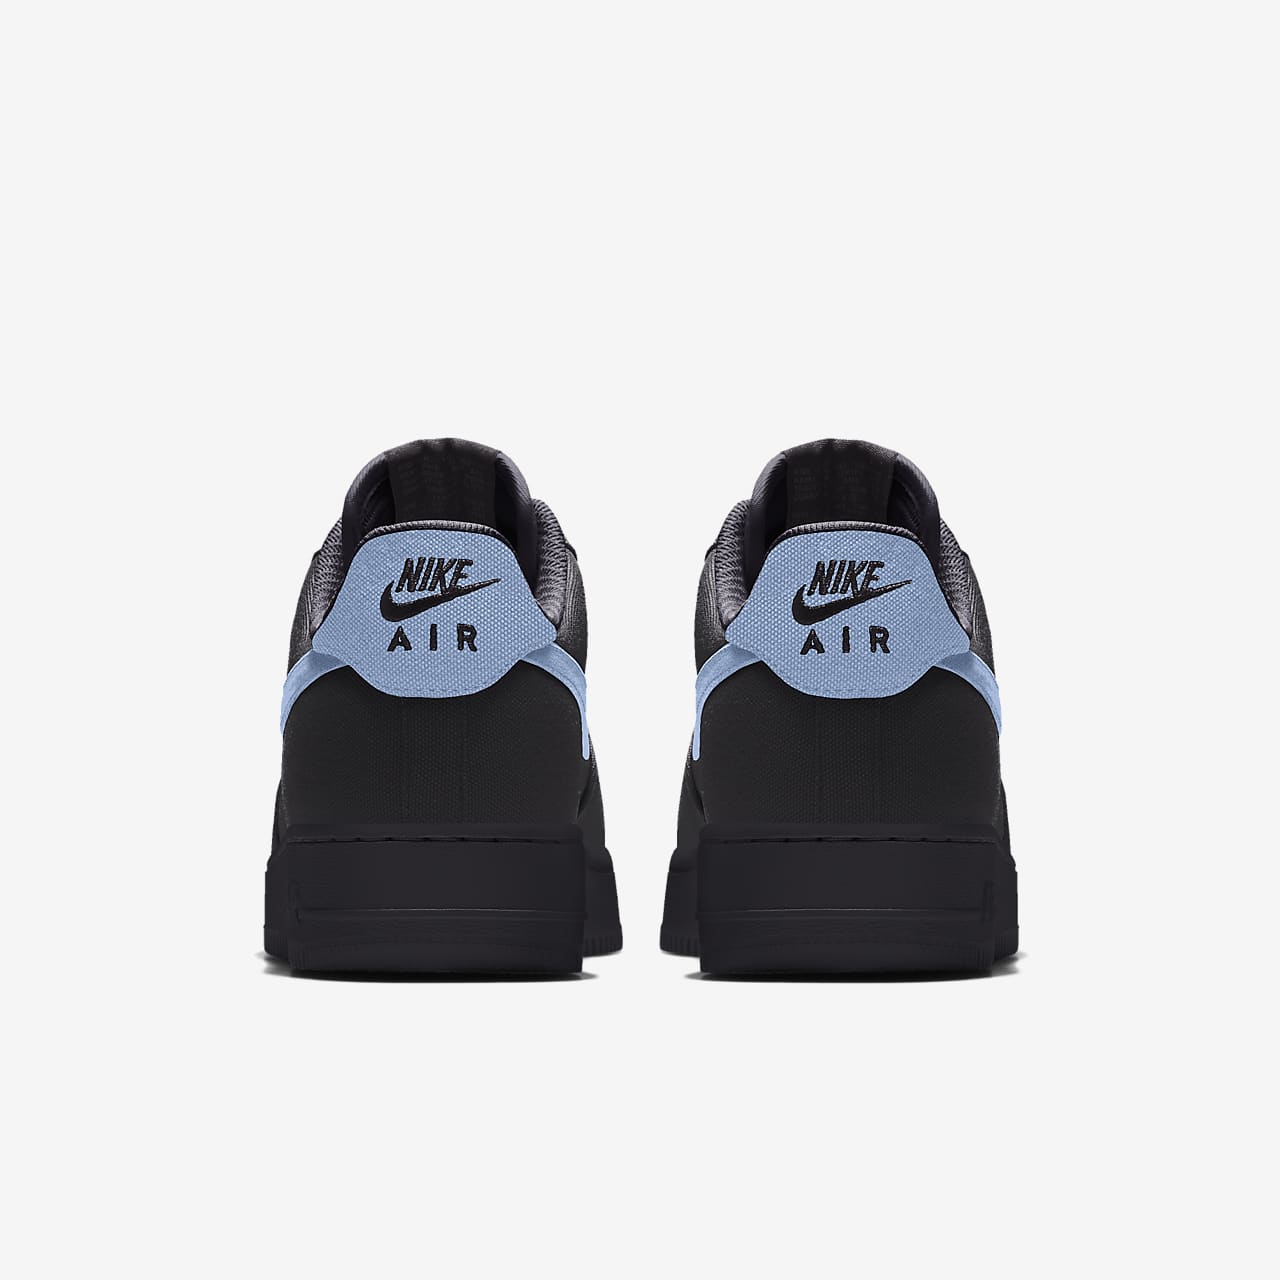 retroceder Grabar Consecutivo Nike Air Force 1 Low By You Zapatillas personalizables - Hombre. Nike ES